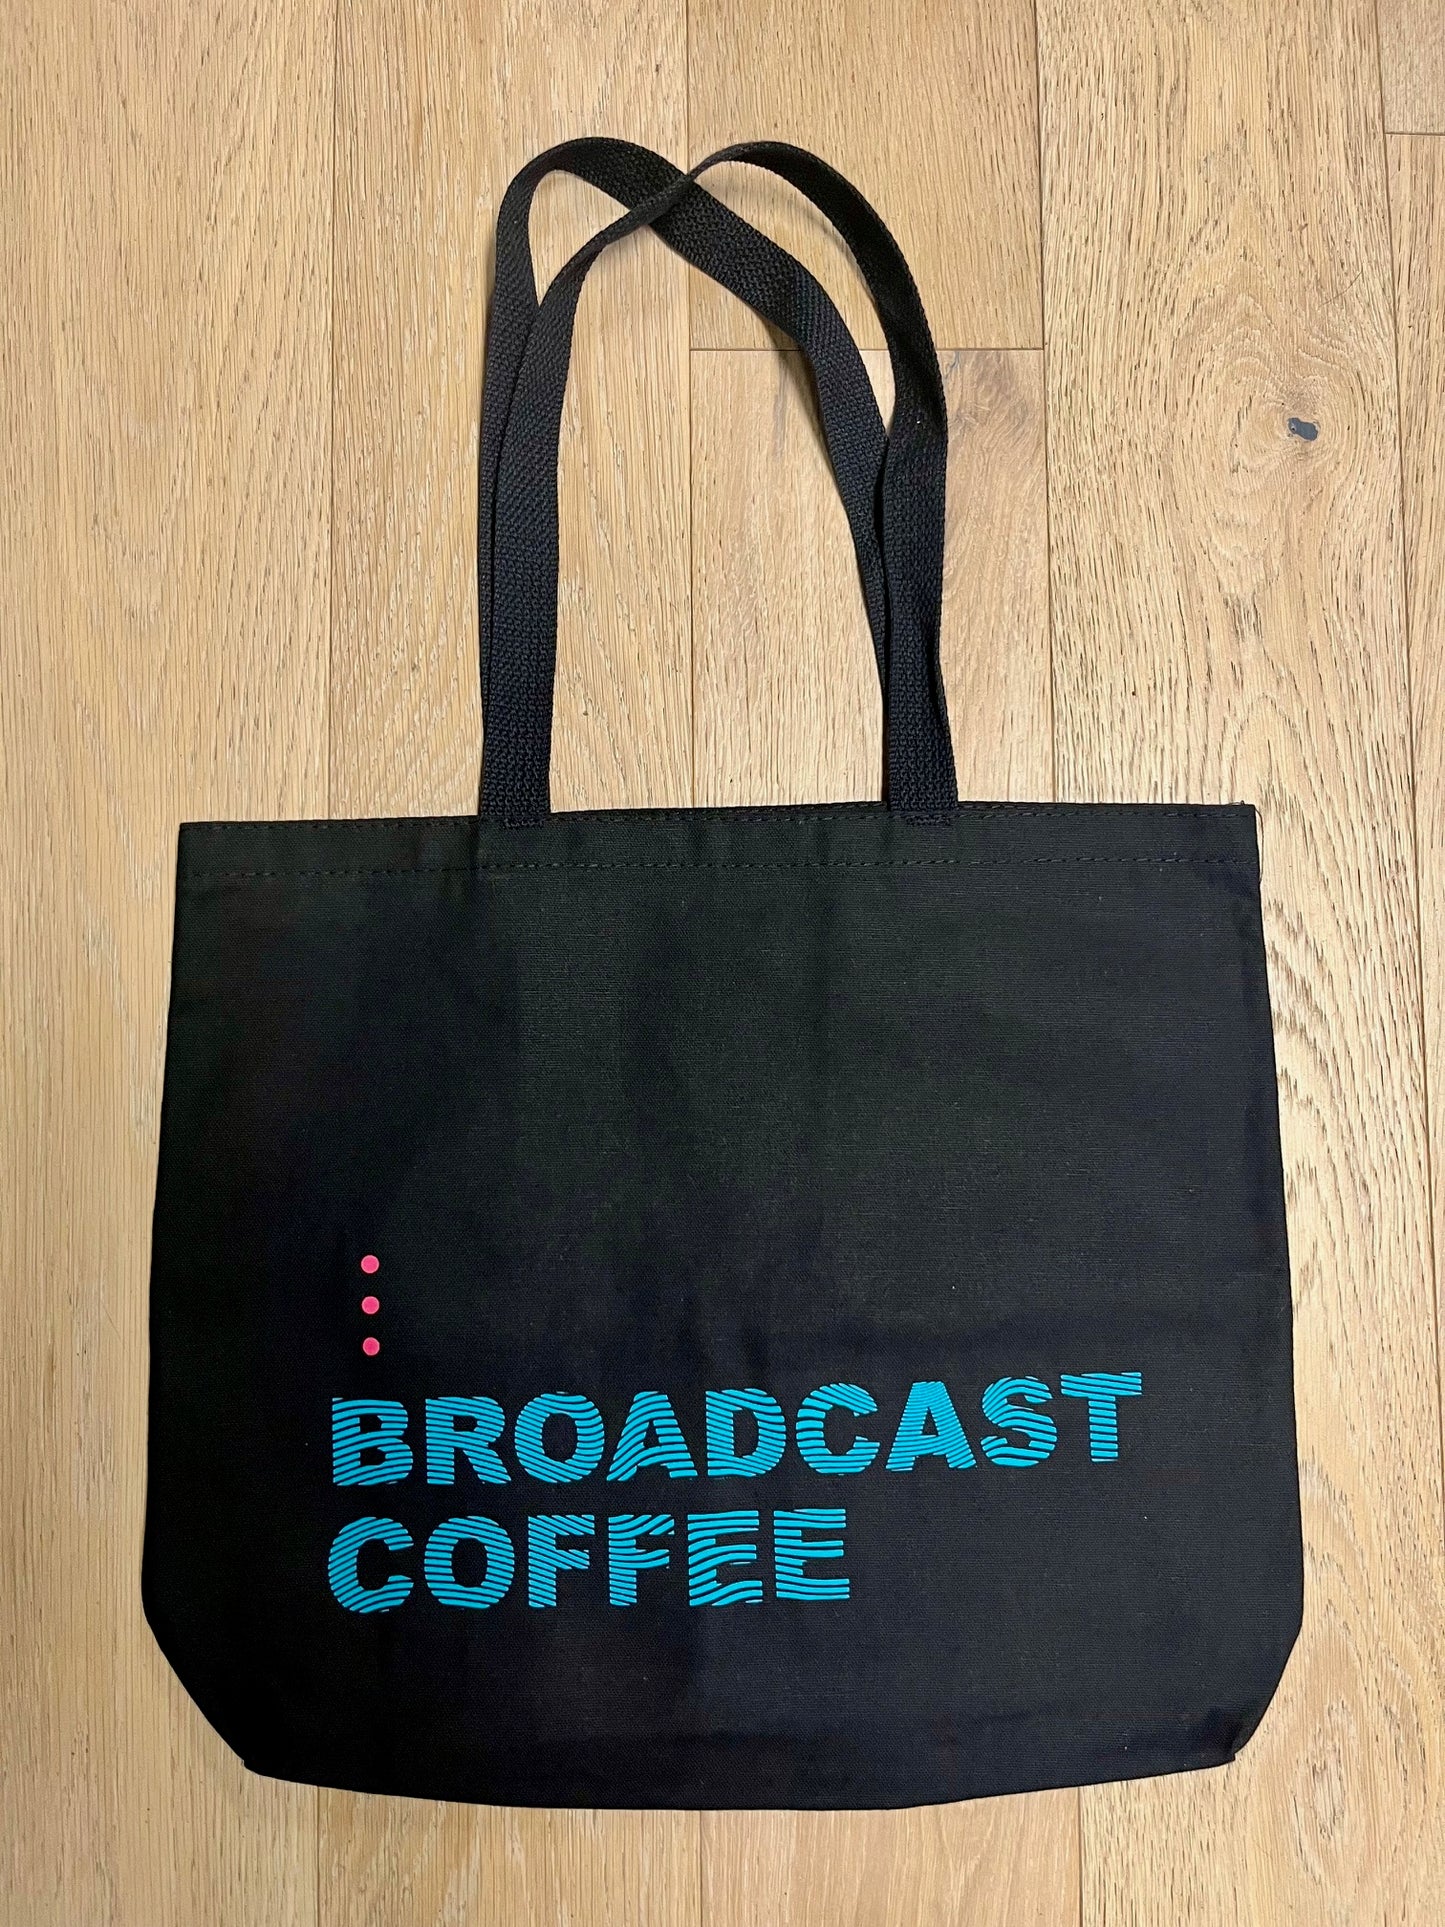 Broadcast Tote Bag